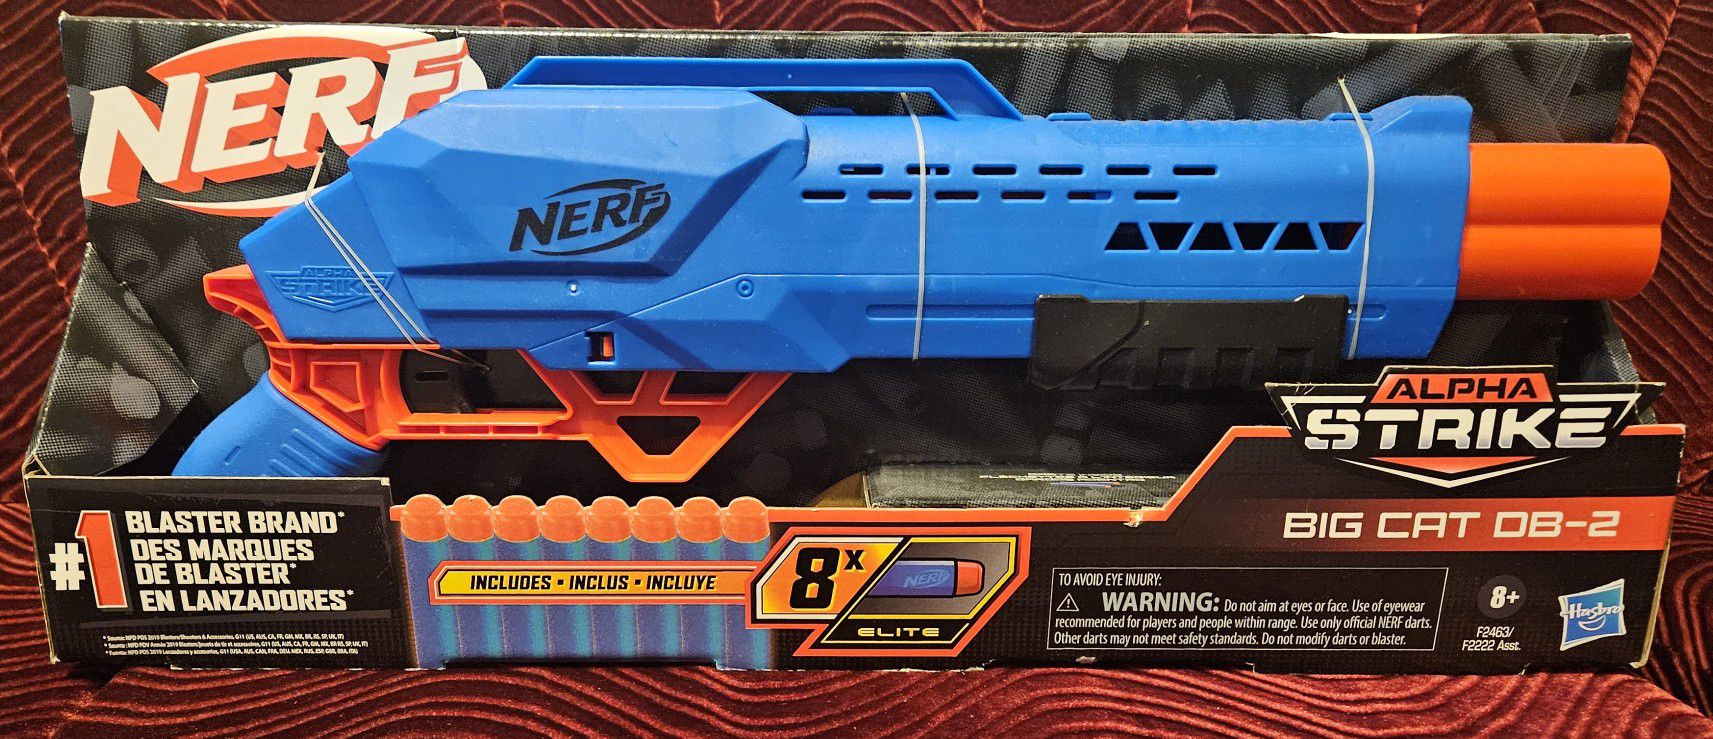 Nerf Alpha Strike Big Cat DB-2 Blaster Dart Gun And 8 Darts

